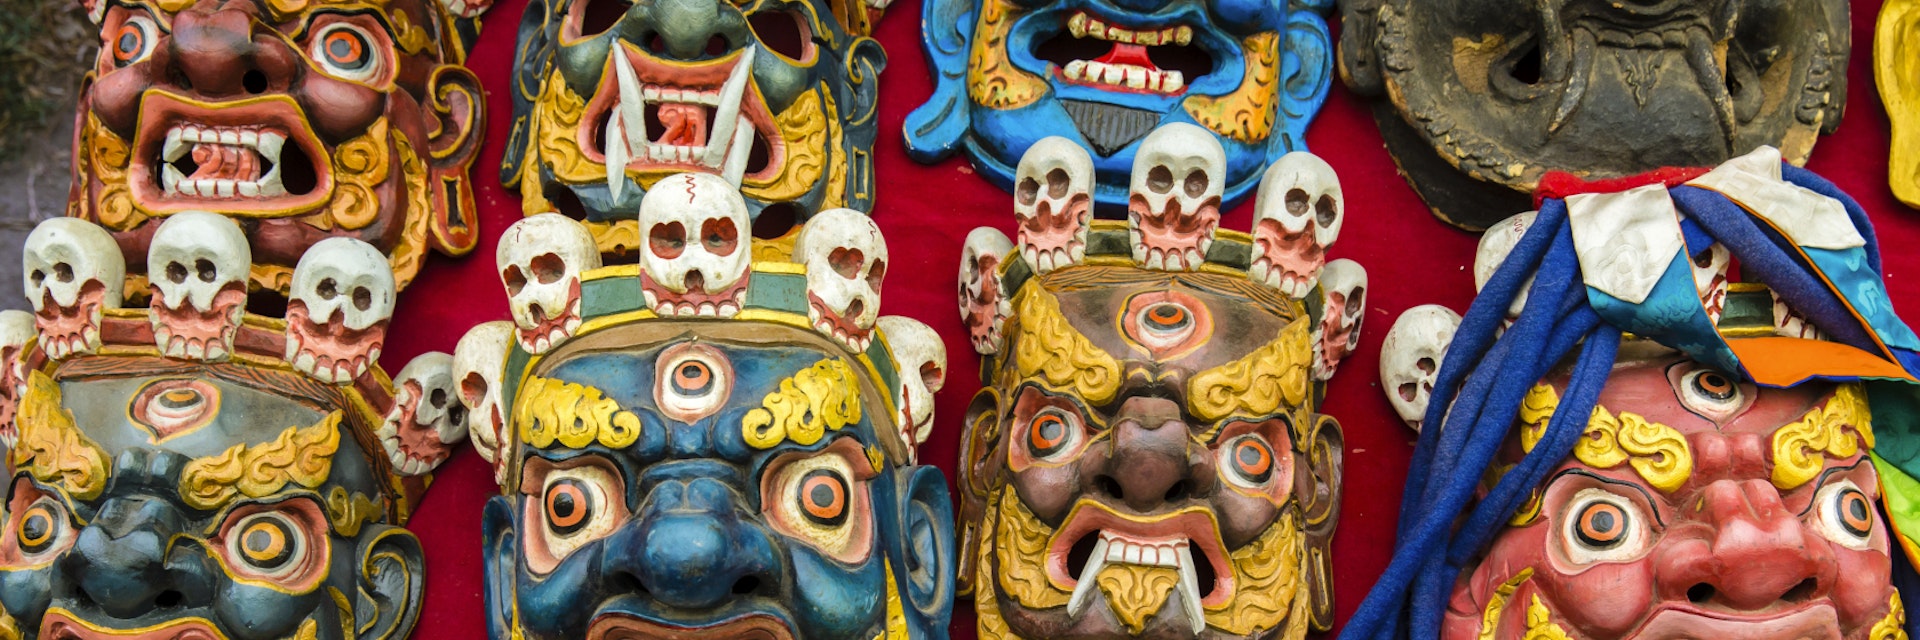 Masks on display at Handicraft Market